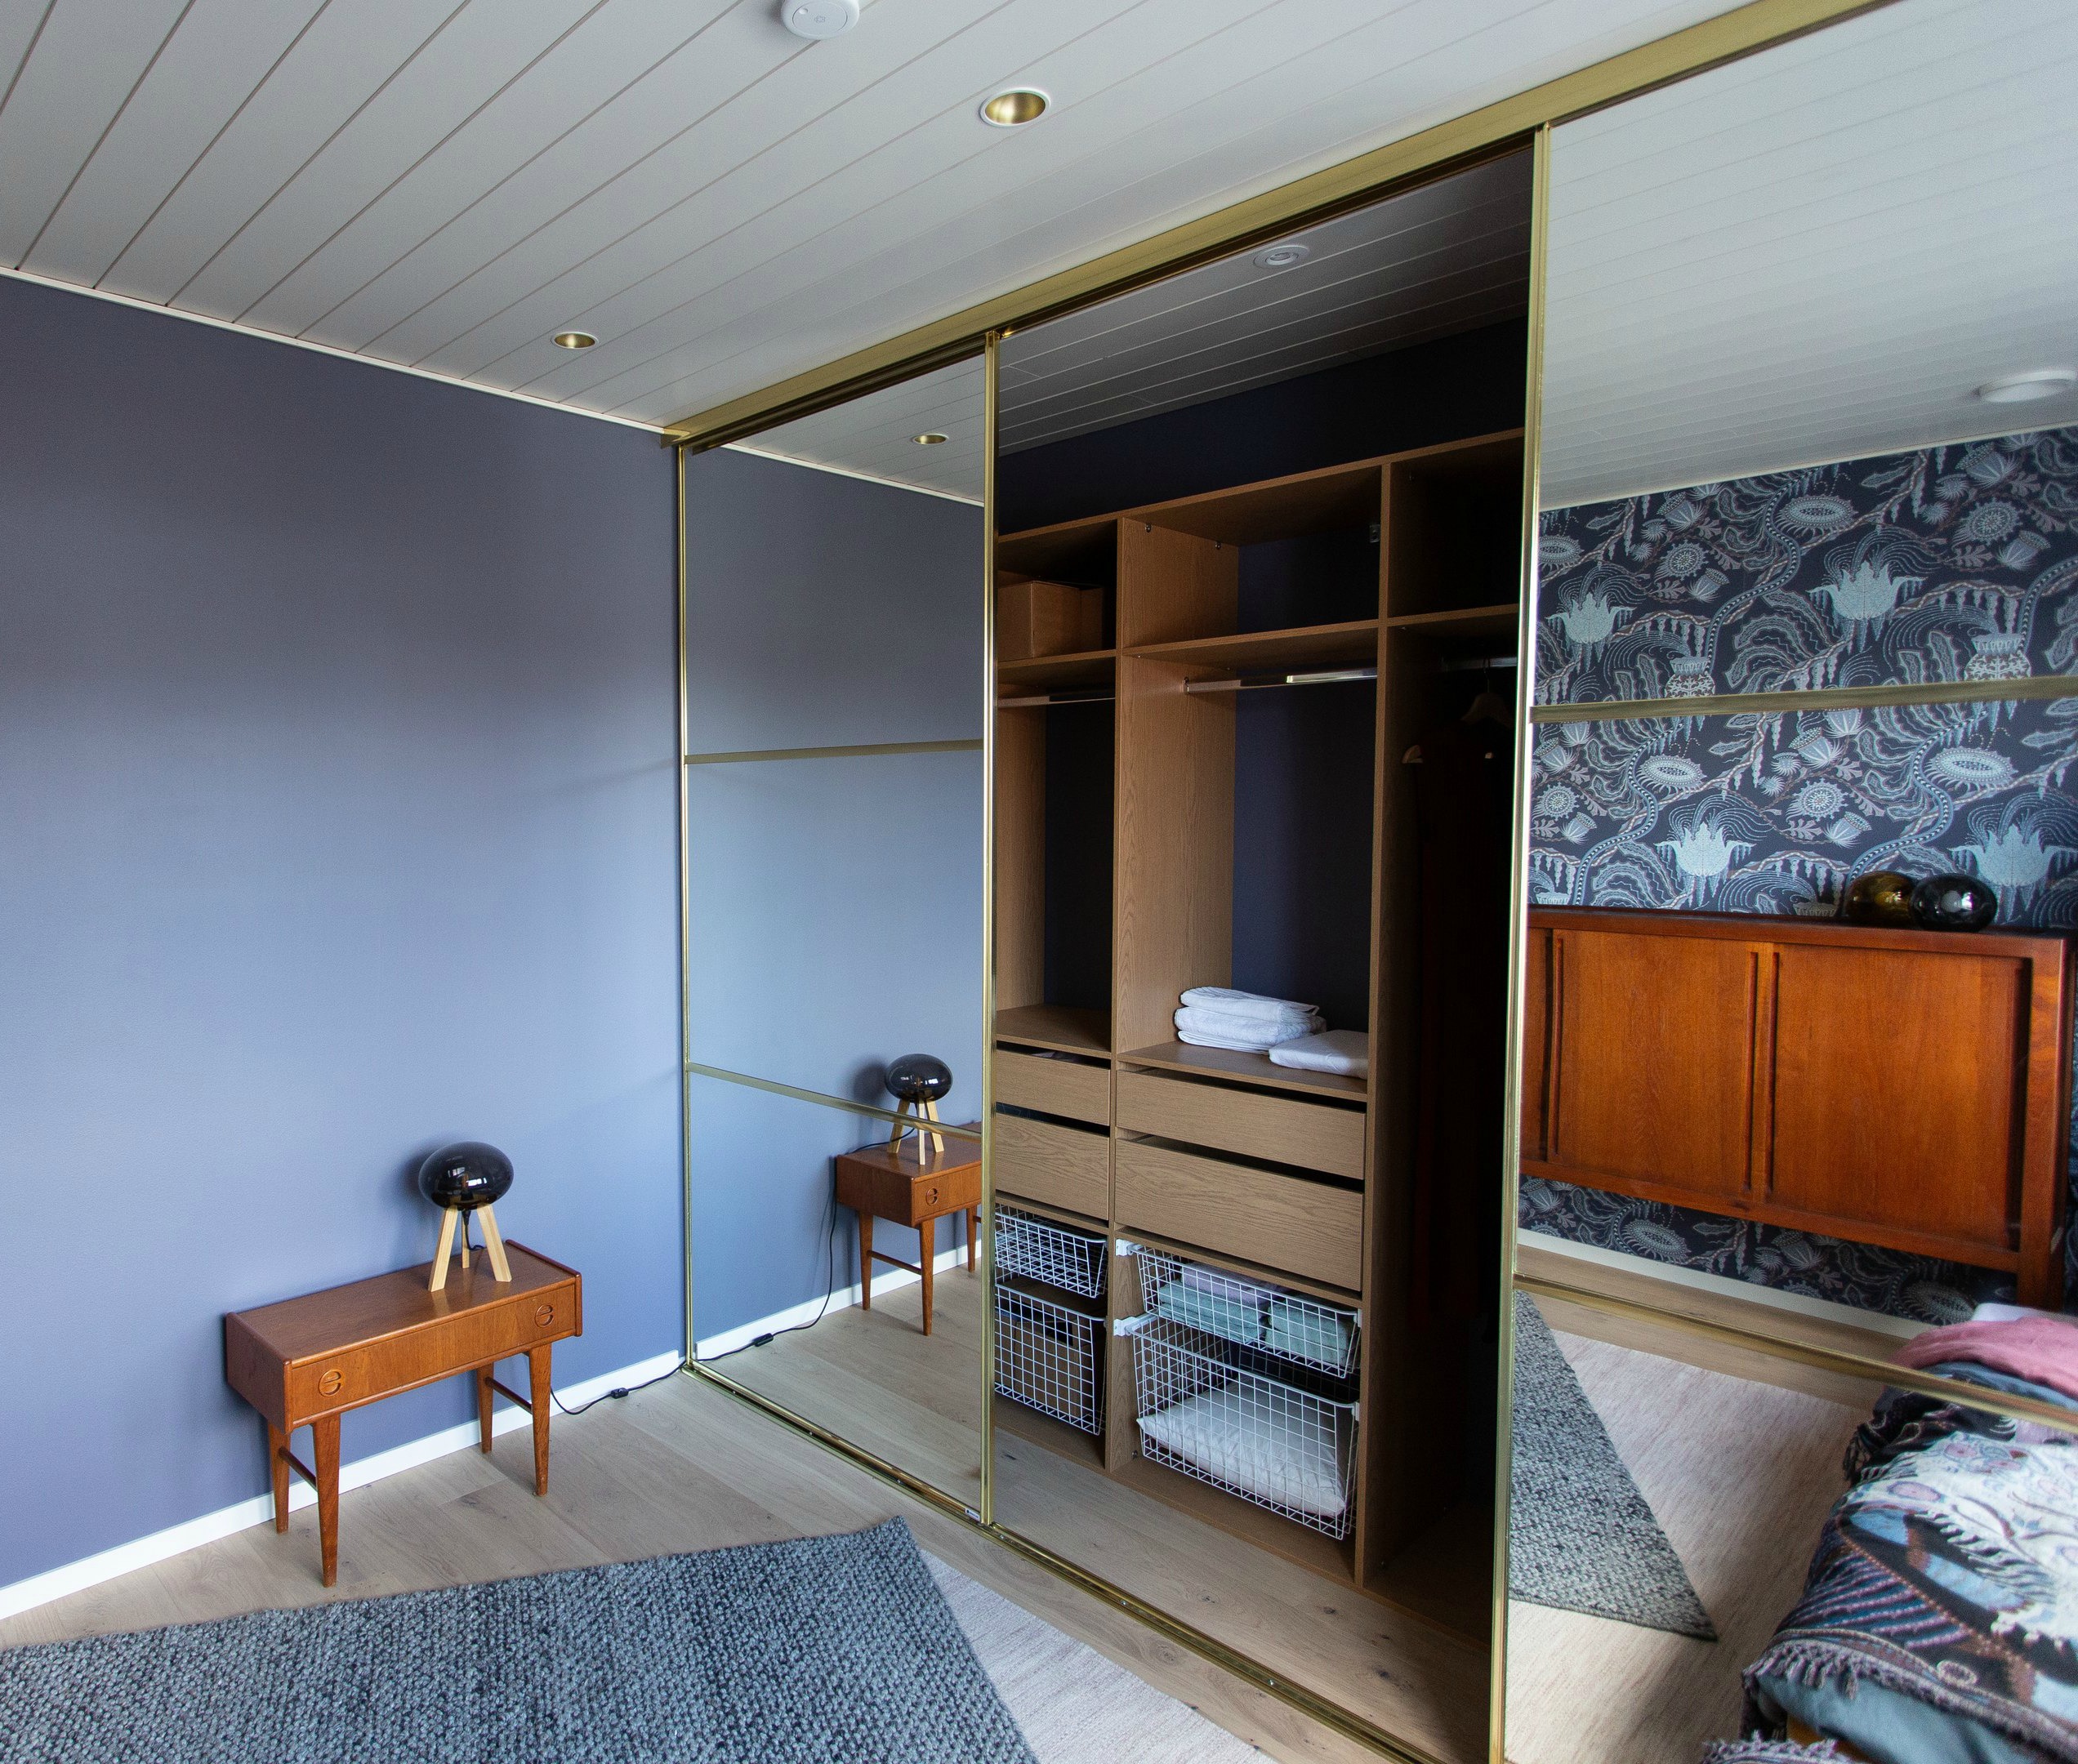 Mirror Line liukuovi peiliovi vaatekaappi makuuhuoneen sisustusideat Asuntomessut 2020 Kohde 2 Pikkupolku Retro